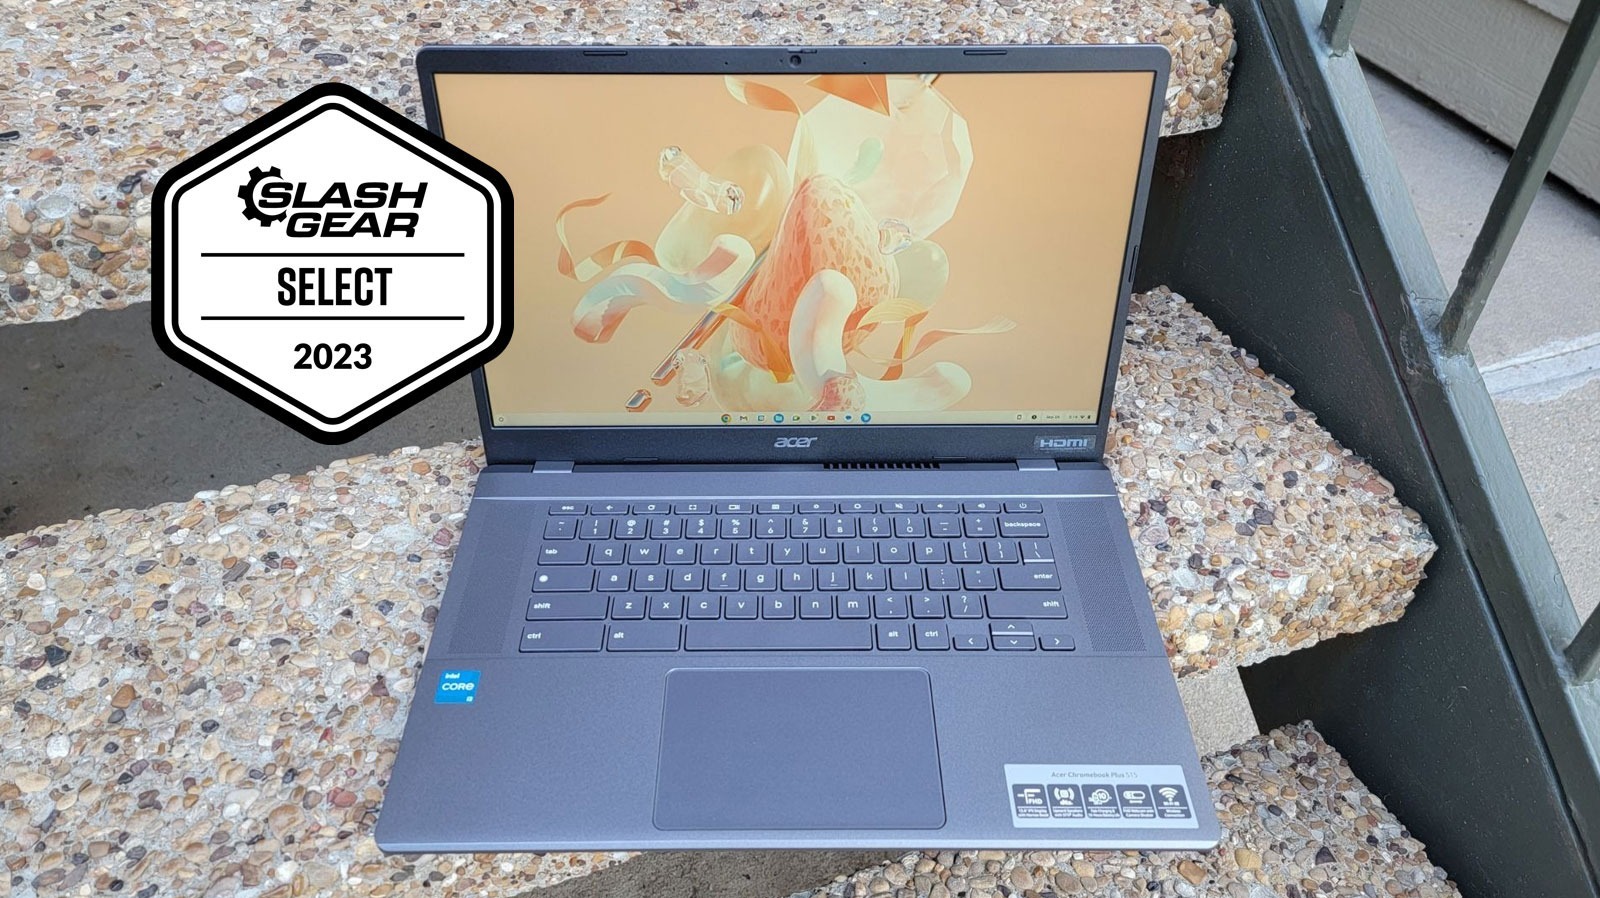 Chromebook Plus Review: Better Specs, Better Cheapo Laptop